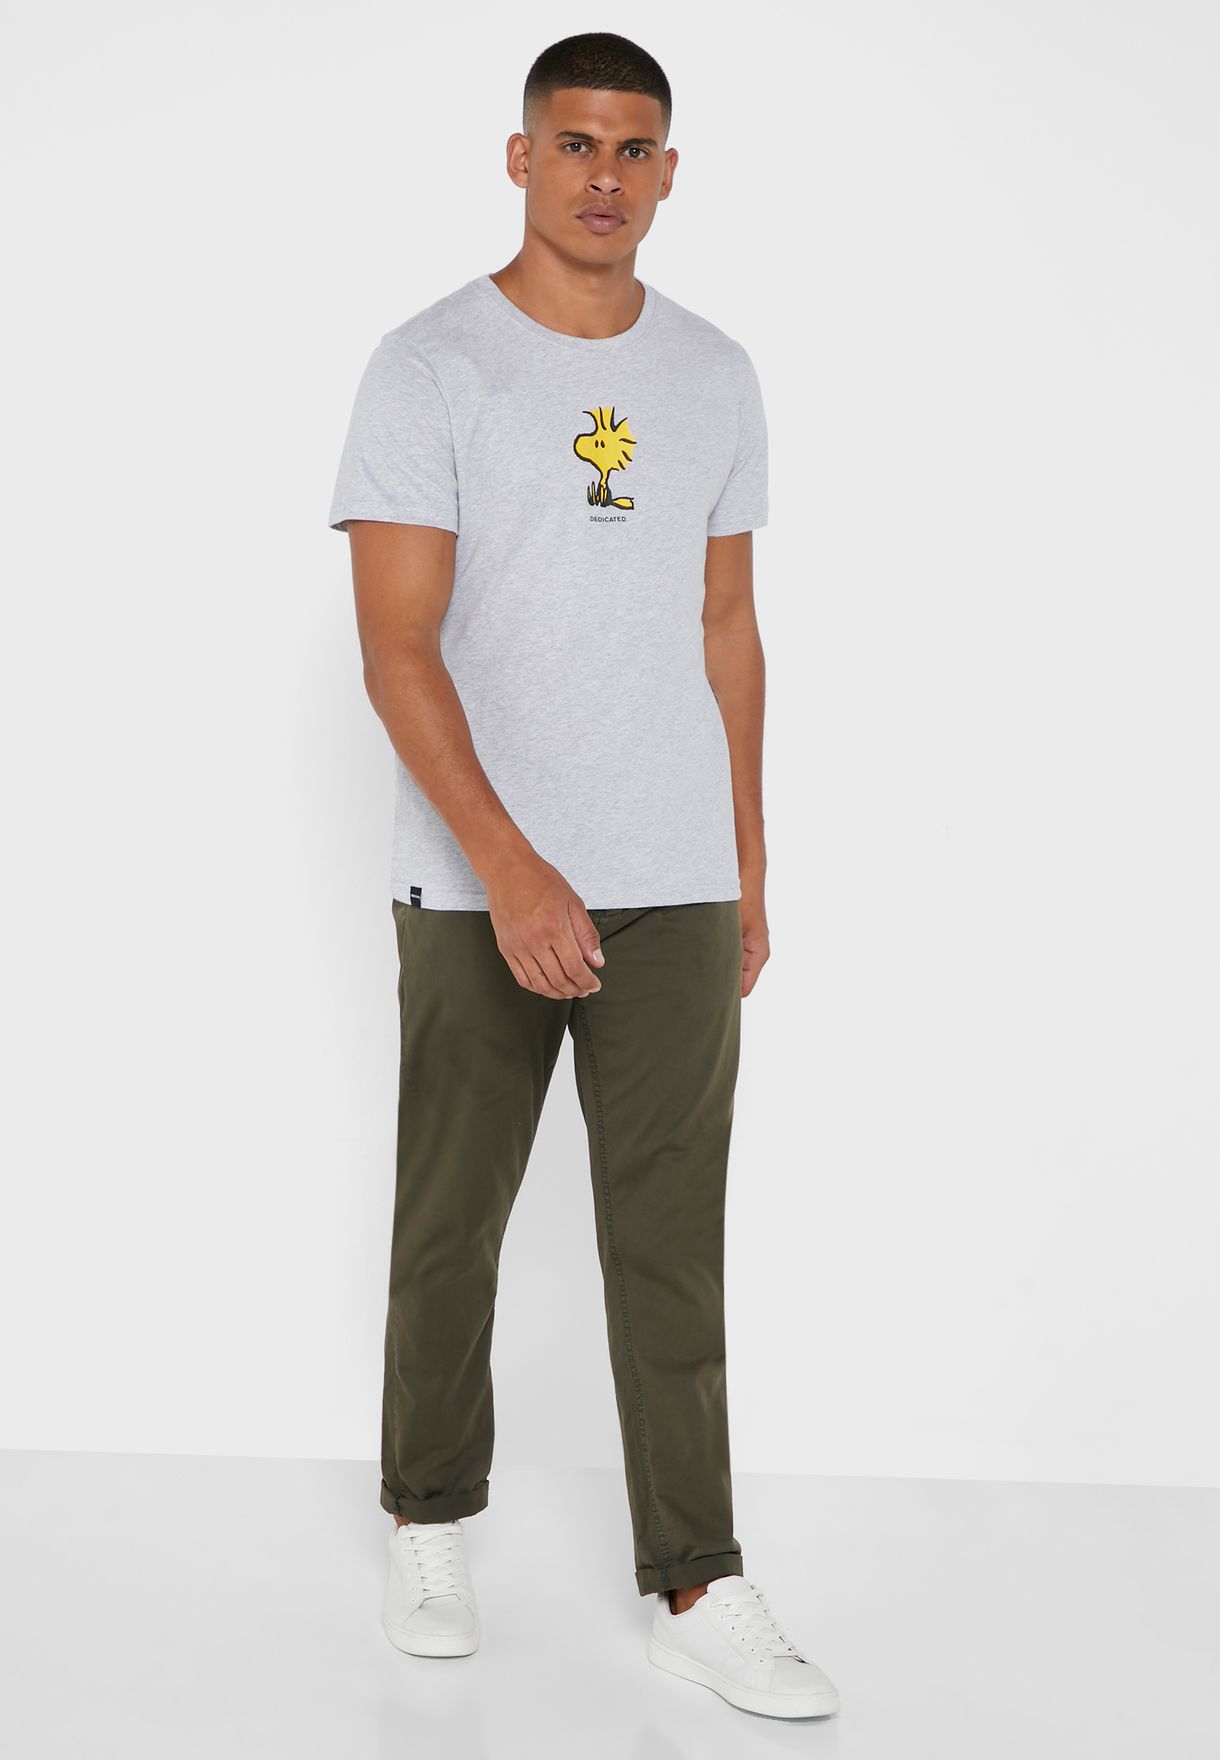 Stockholm Woodstock Crew Neck T-Shirt